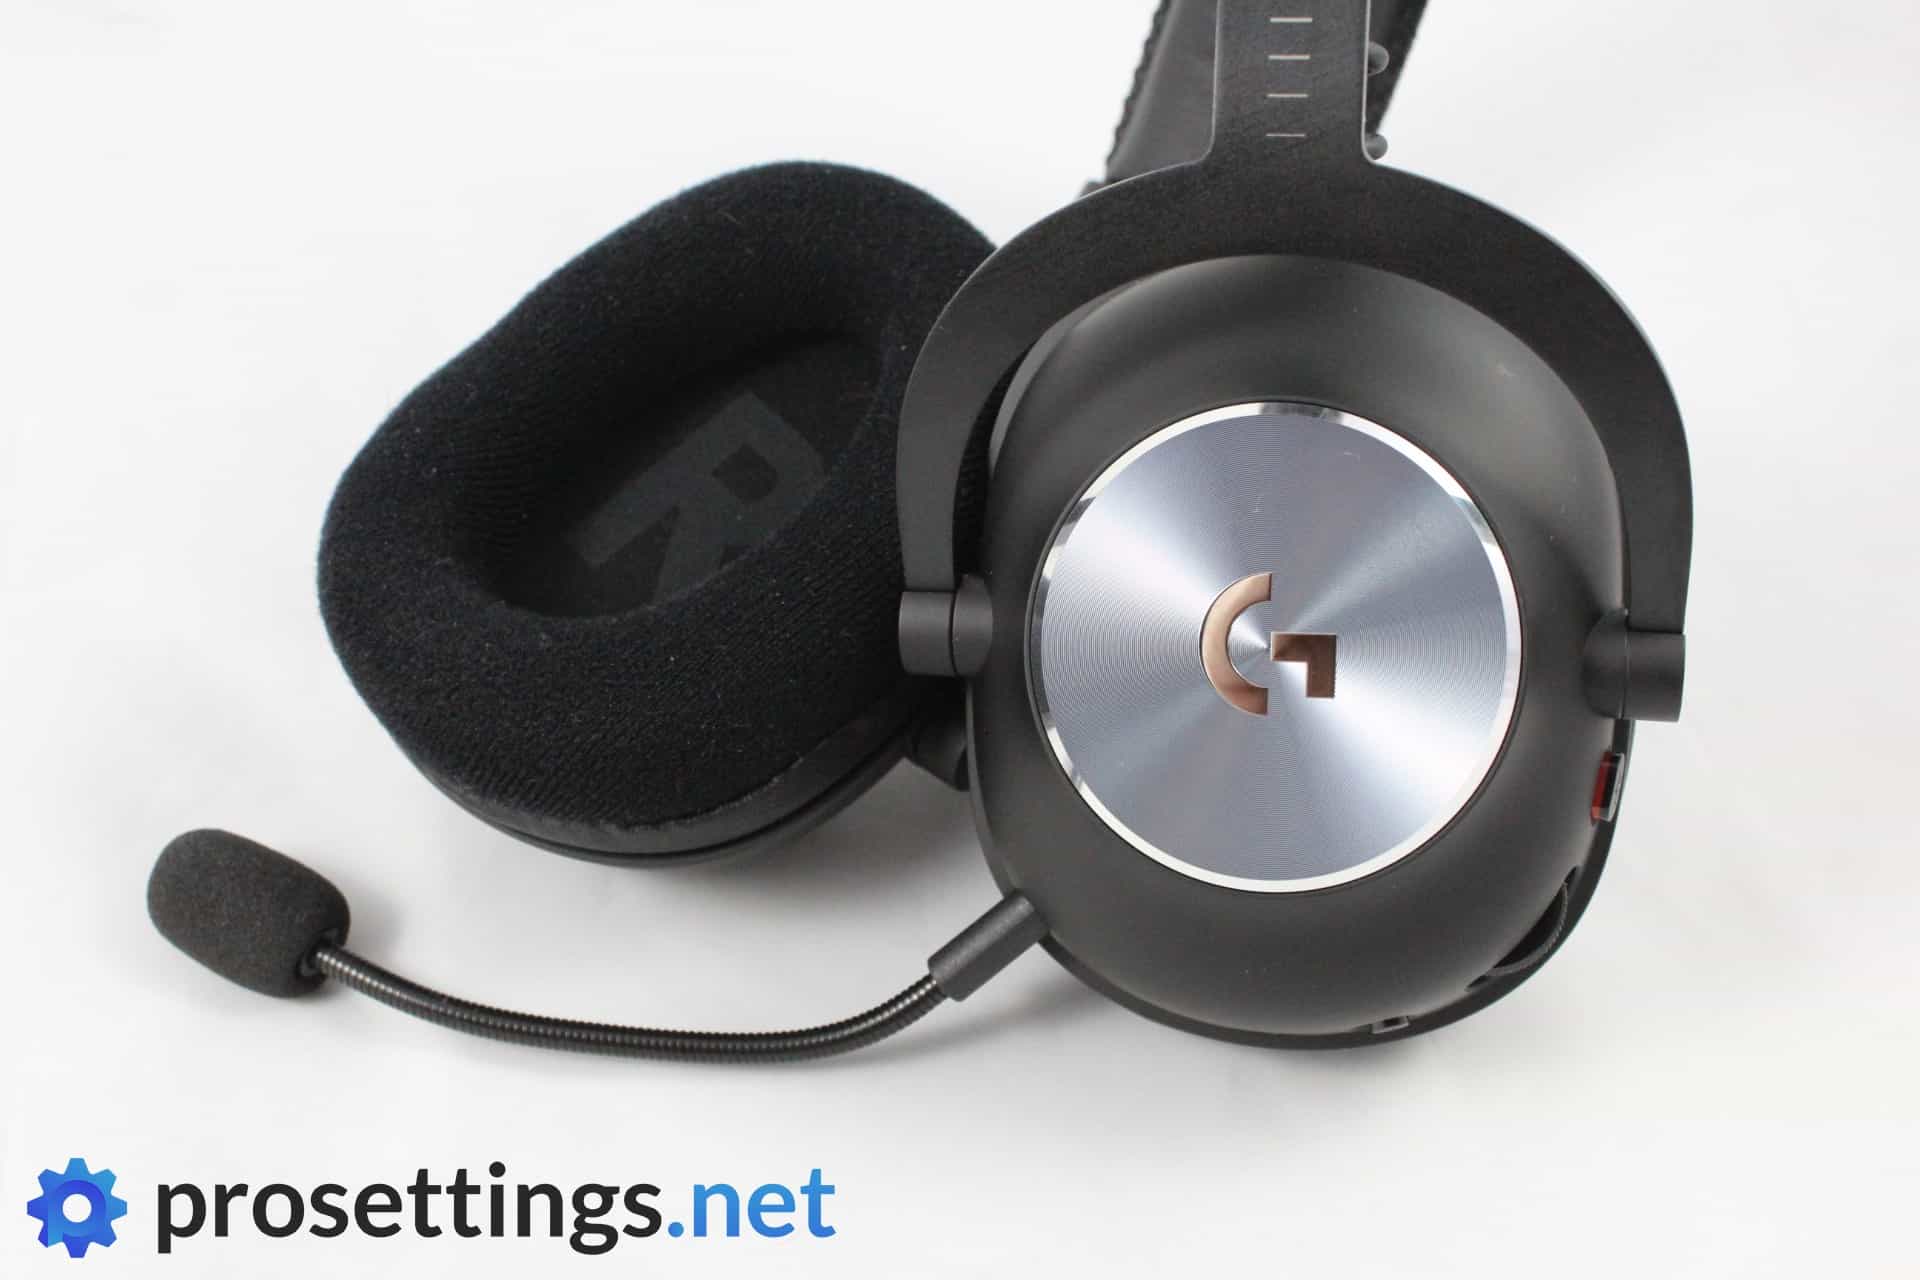 Bedrog maagd engineering Logitech G Pro X (Wireless) Headset Review